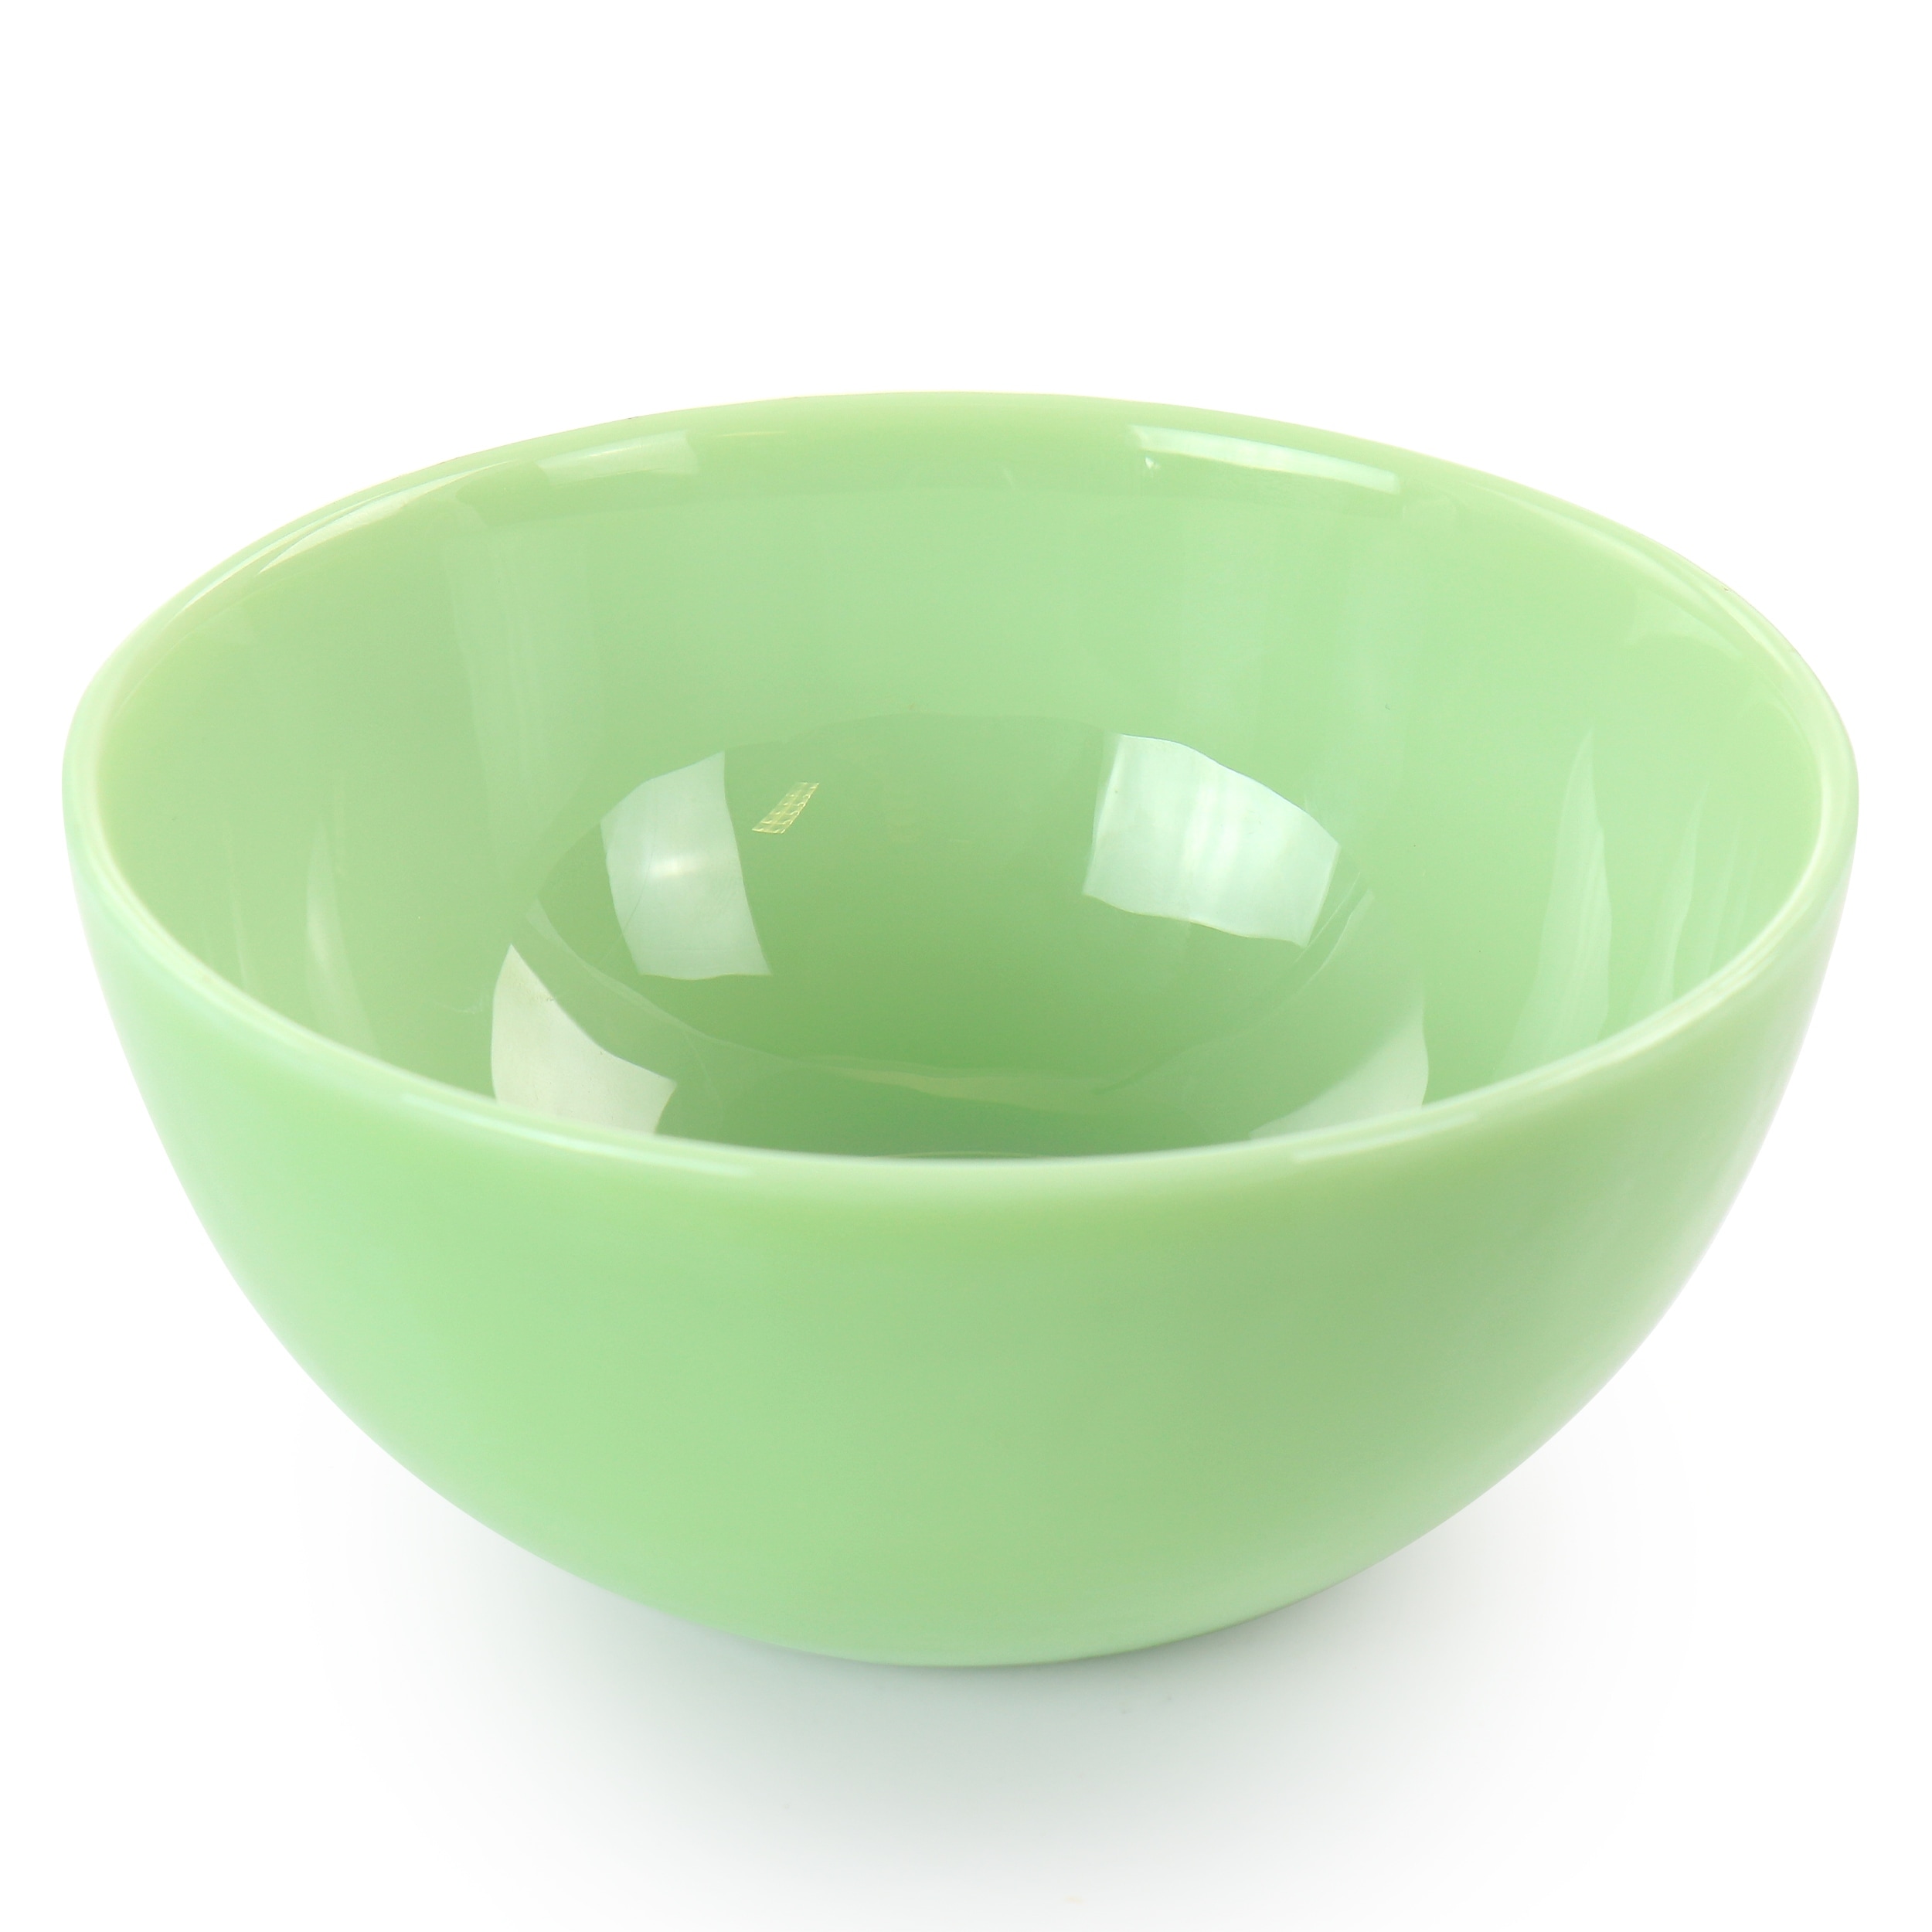 https://ak1.ostkcdn.com/images/products/is/images/direct/b95a6e4a080ed7f59941117eabf9b6fabc7fb966/Martha-Stewart-2-Piece-6-Inch-Jadeite-Glass-Bowl-Set-in-Jade-Green.jpg